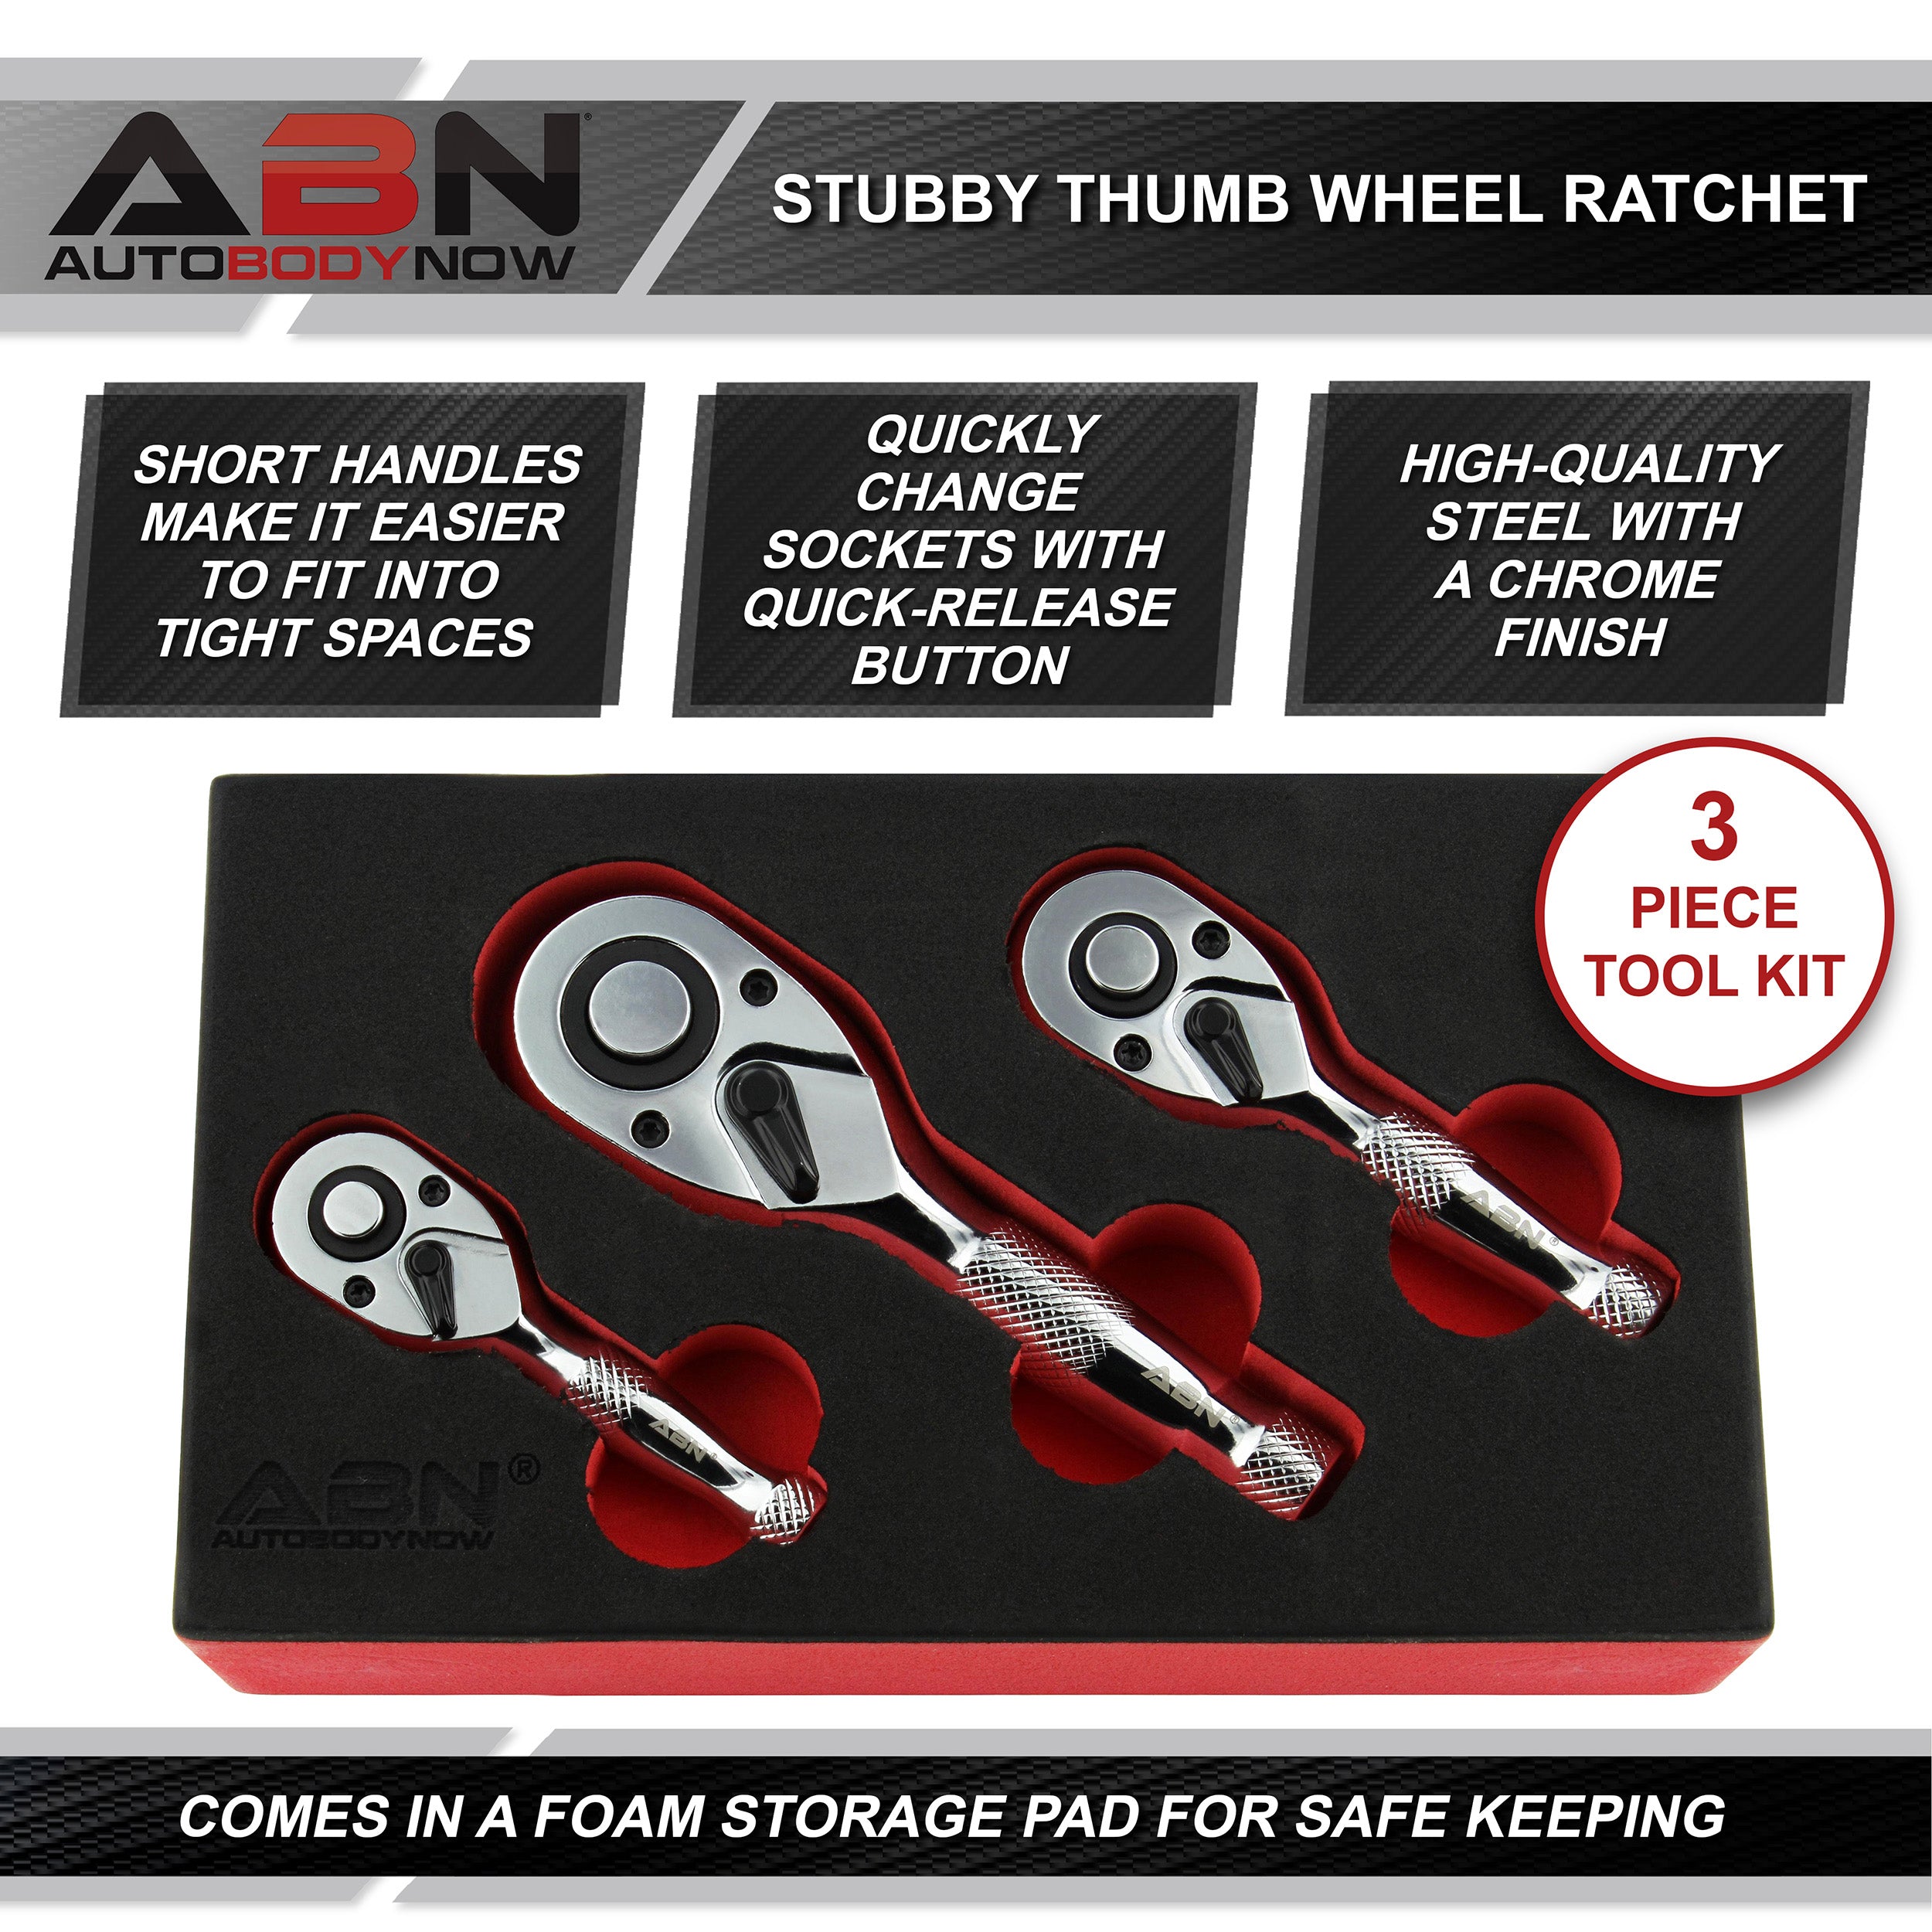 Stubby 3 Piece Ratchet Tools - Thumb Wheel Ratchet Set 3/8 1/4 1/2in